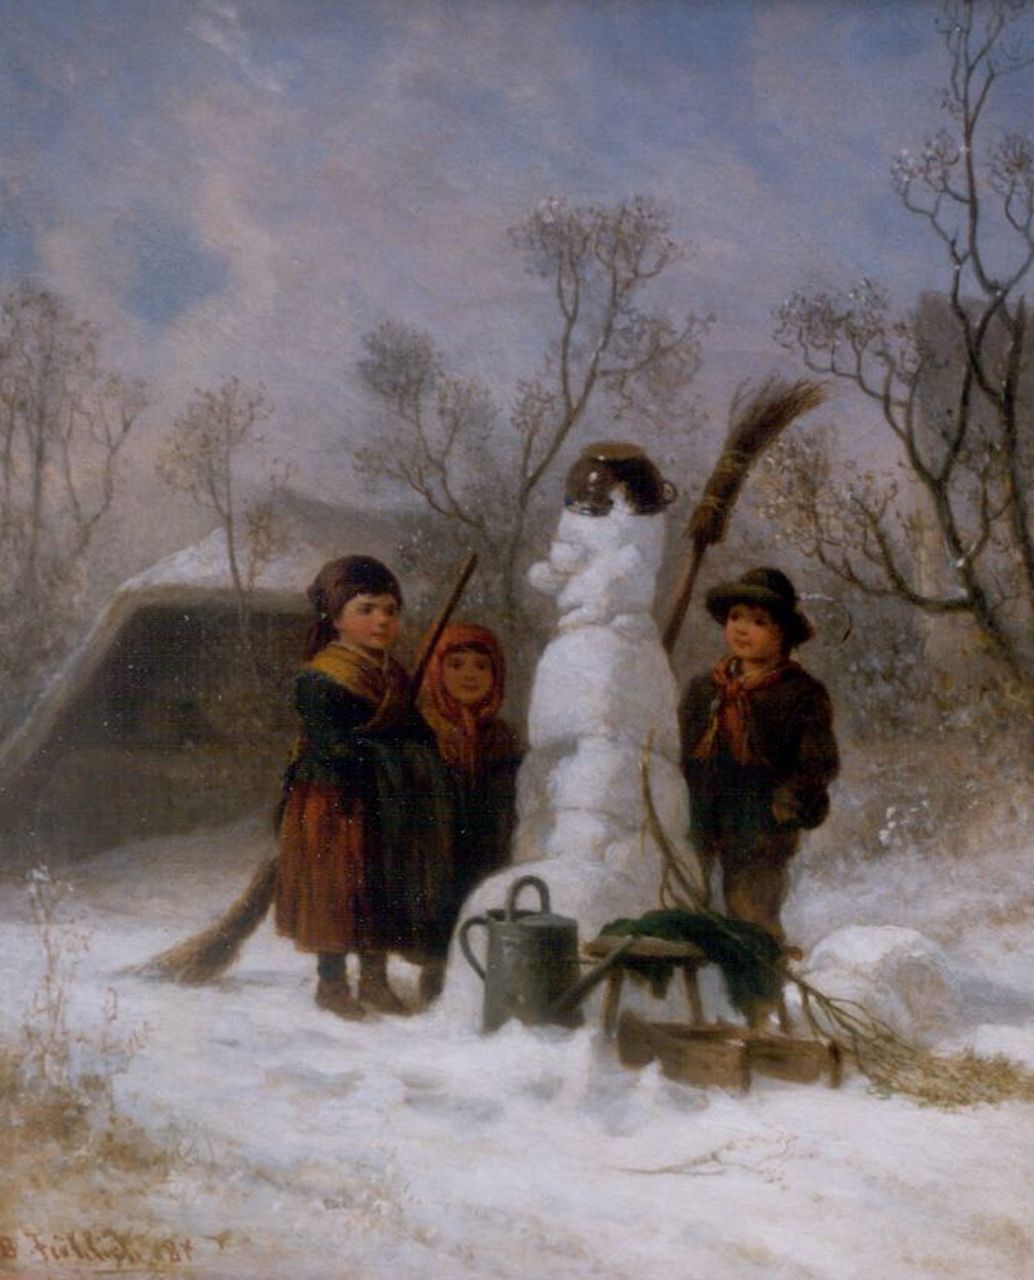 Fröhlich B.  | Bernhard Fröhlich, Bewondering voor de mooie sneeuwman, olieverf op doek 26,0 x 21,4 cm, gedateerd '84